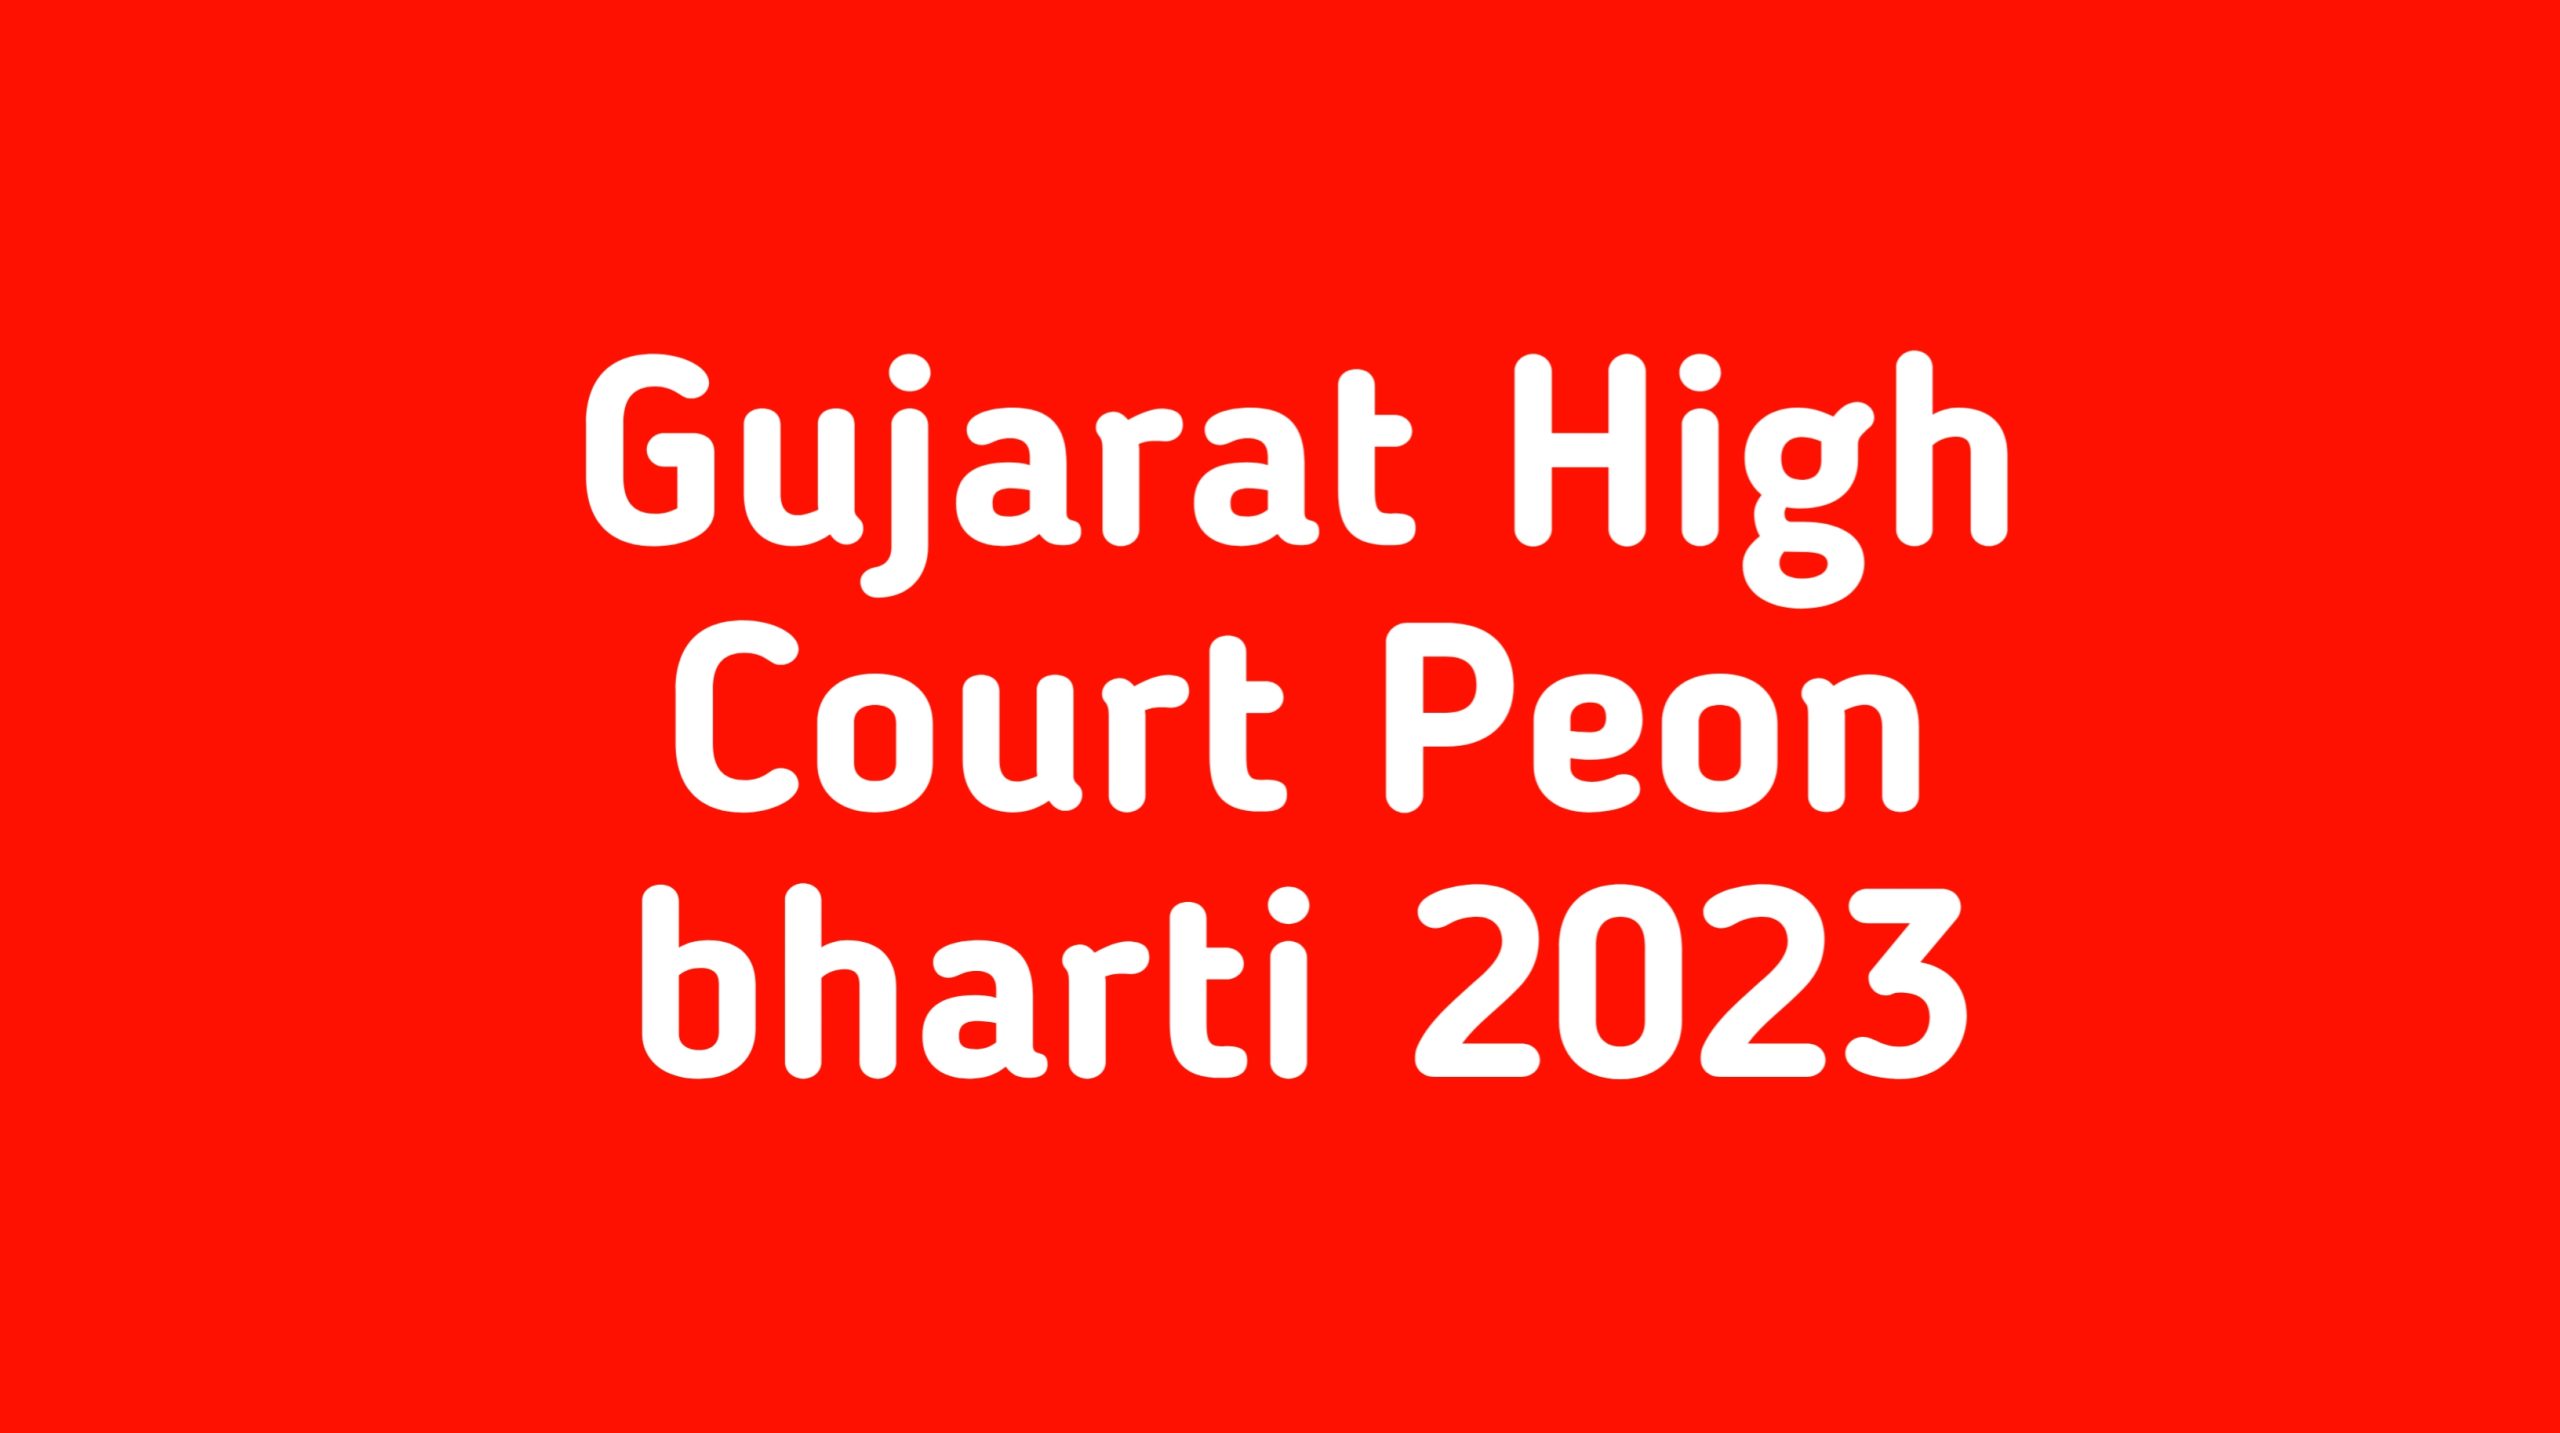 Gujarat High Court Peon bharti 2023